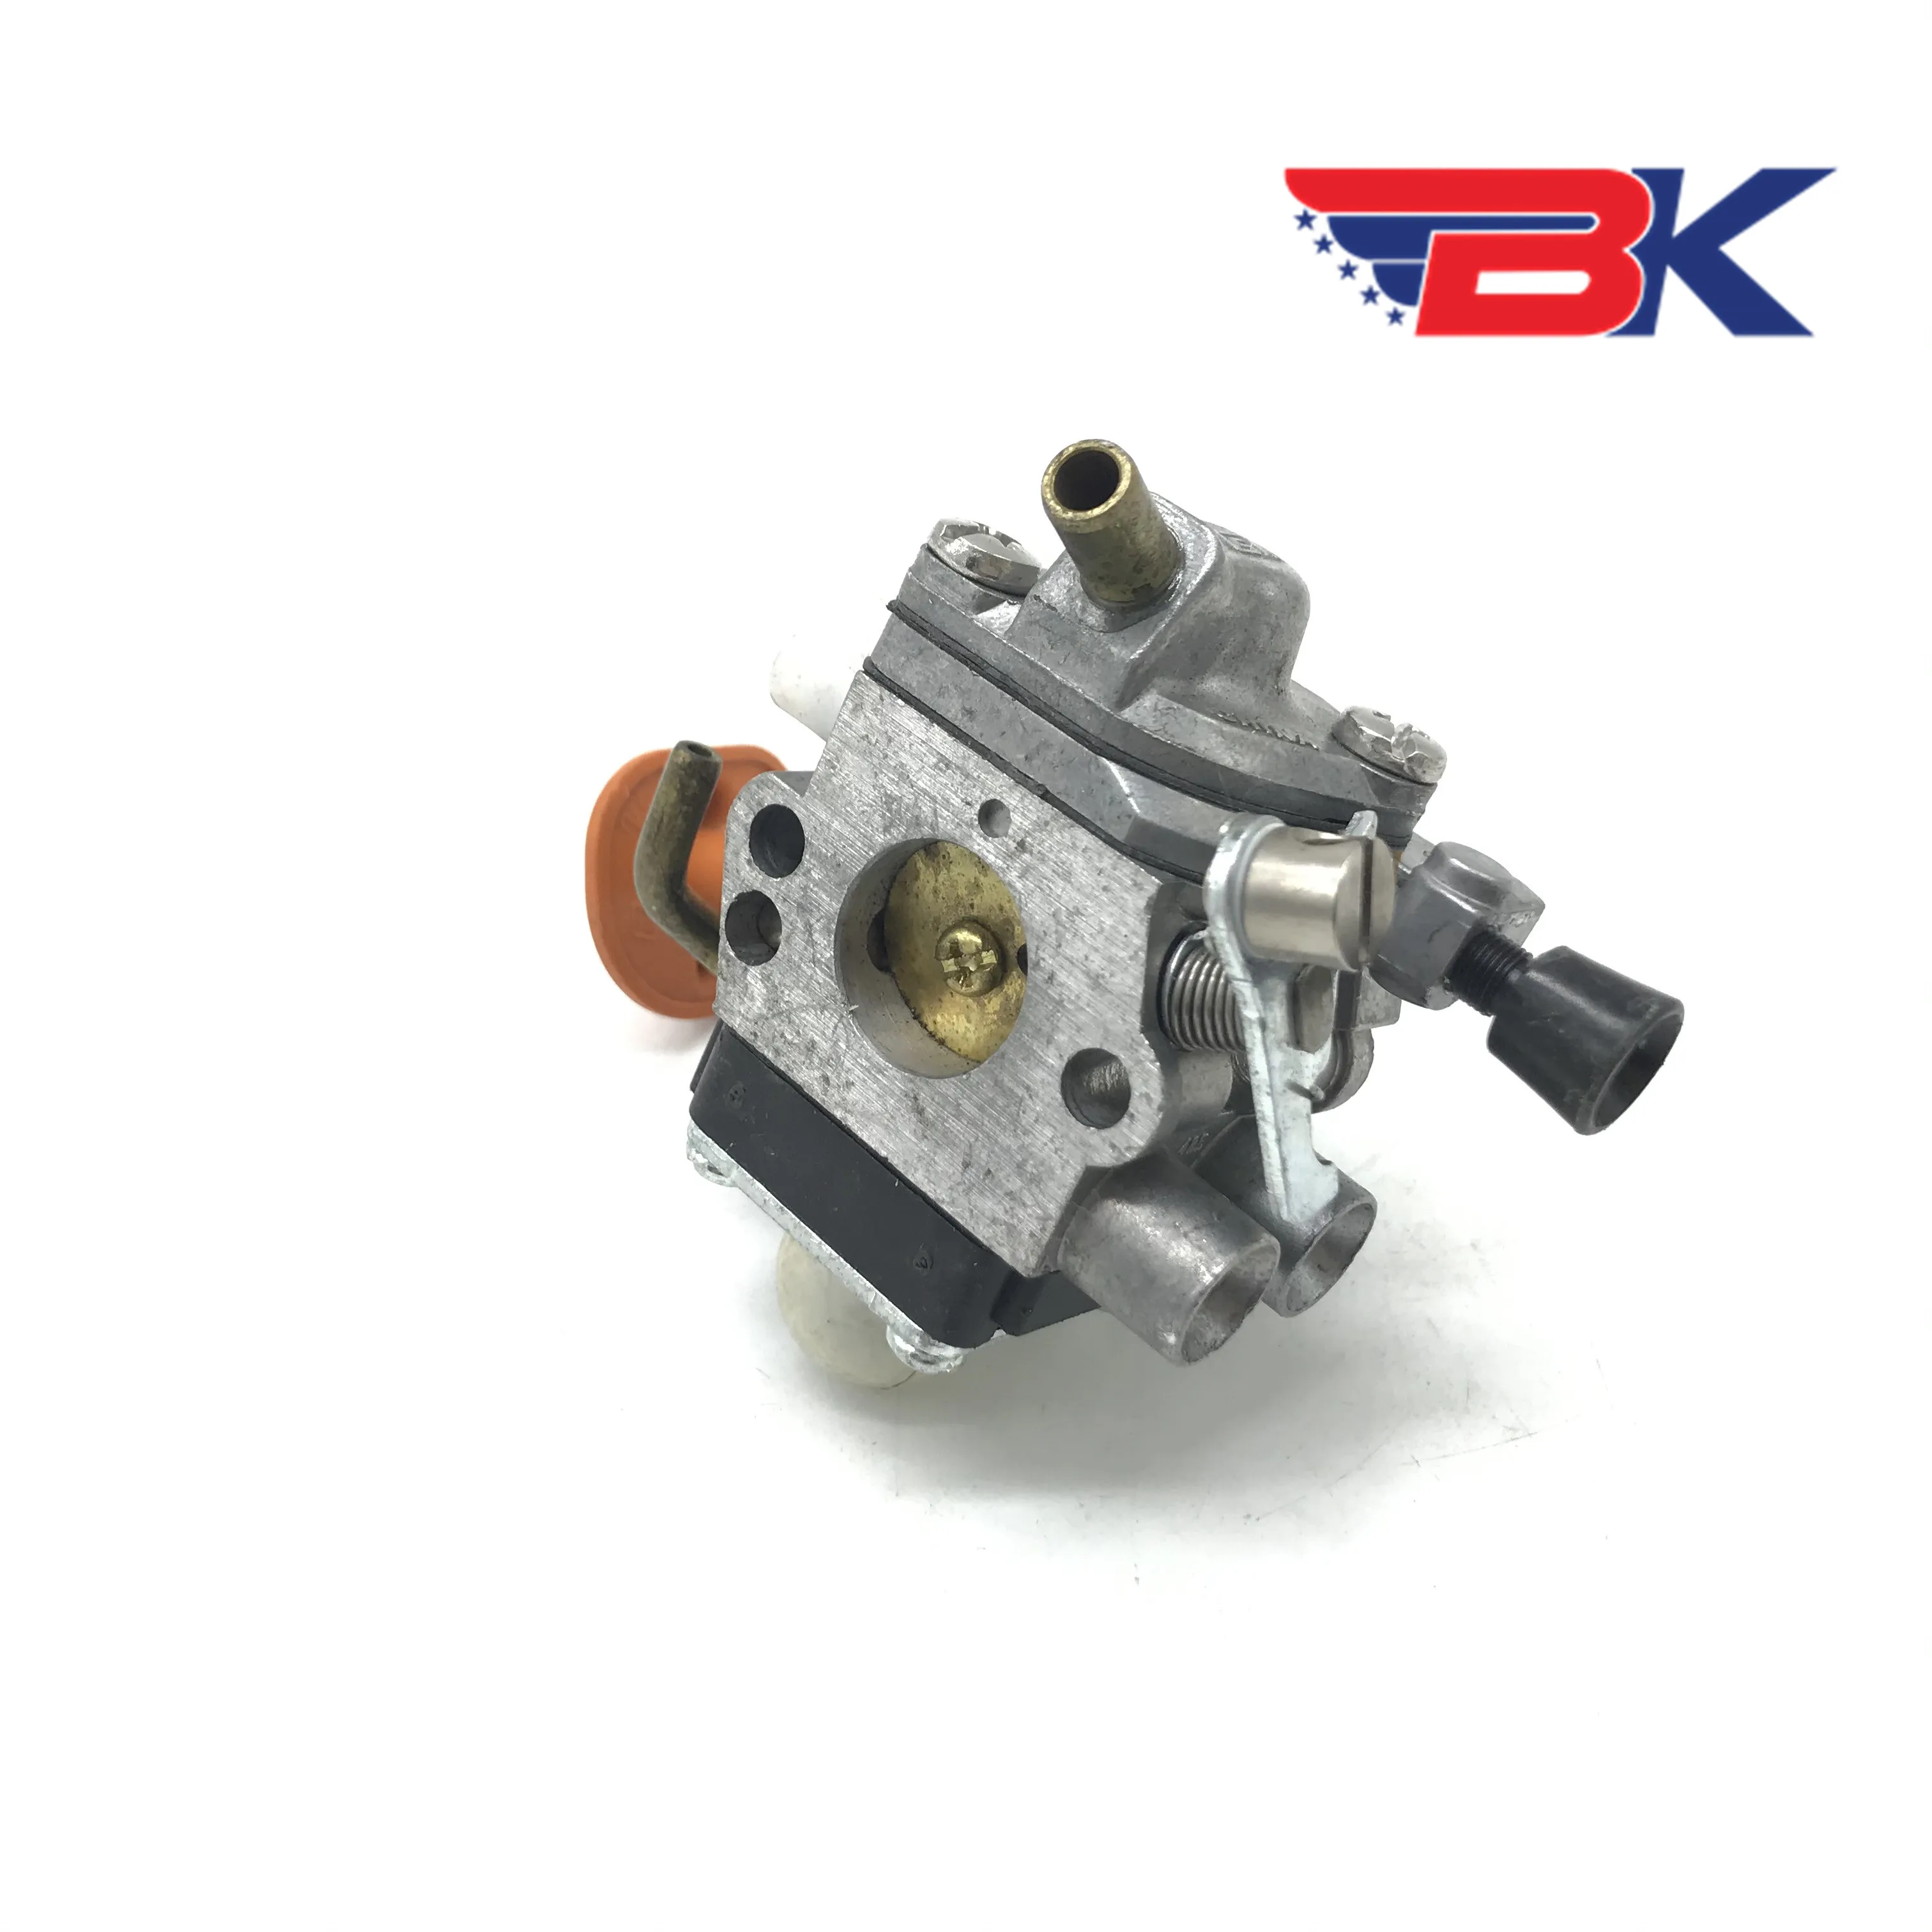 Details about   Carburetor C1Q-S174 for STIHL KM90 KM100 KM110 SP90 Carb Trimmer 4180-120-0610 